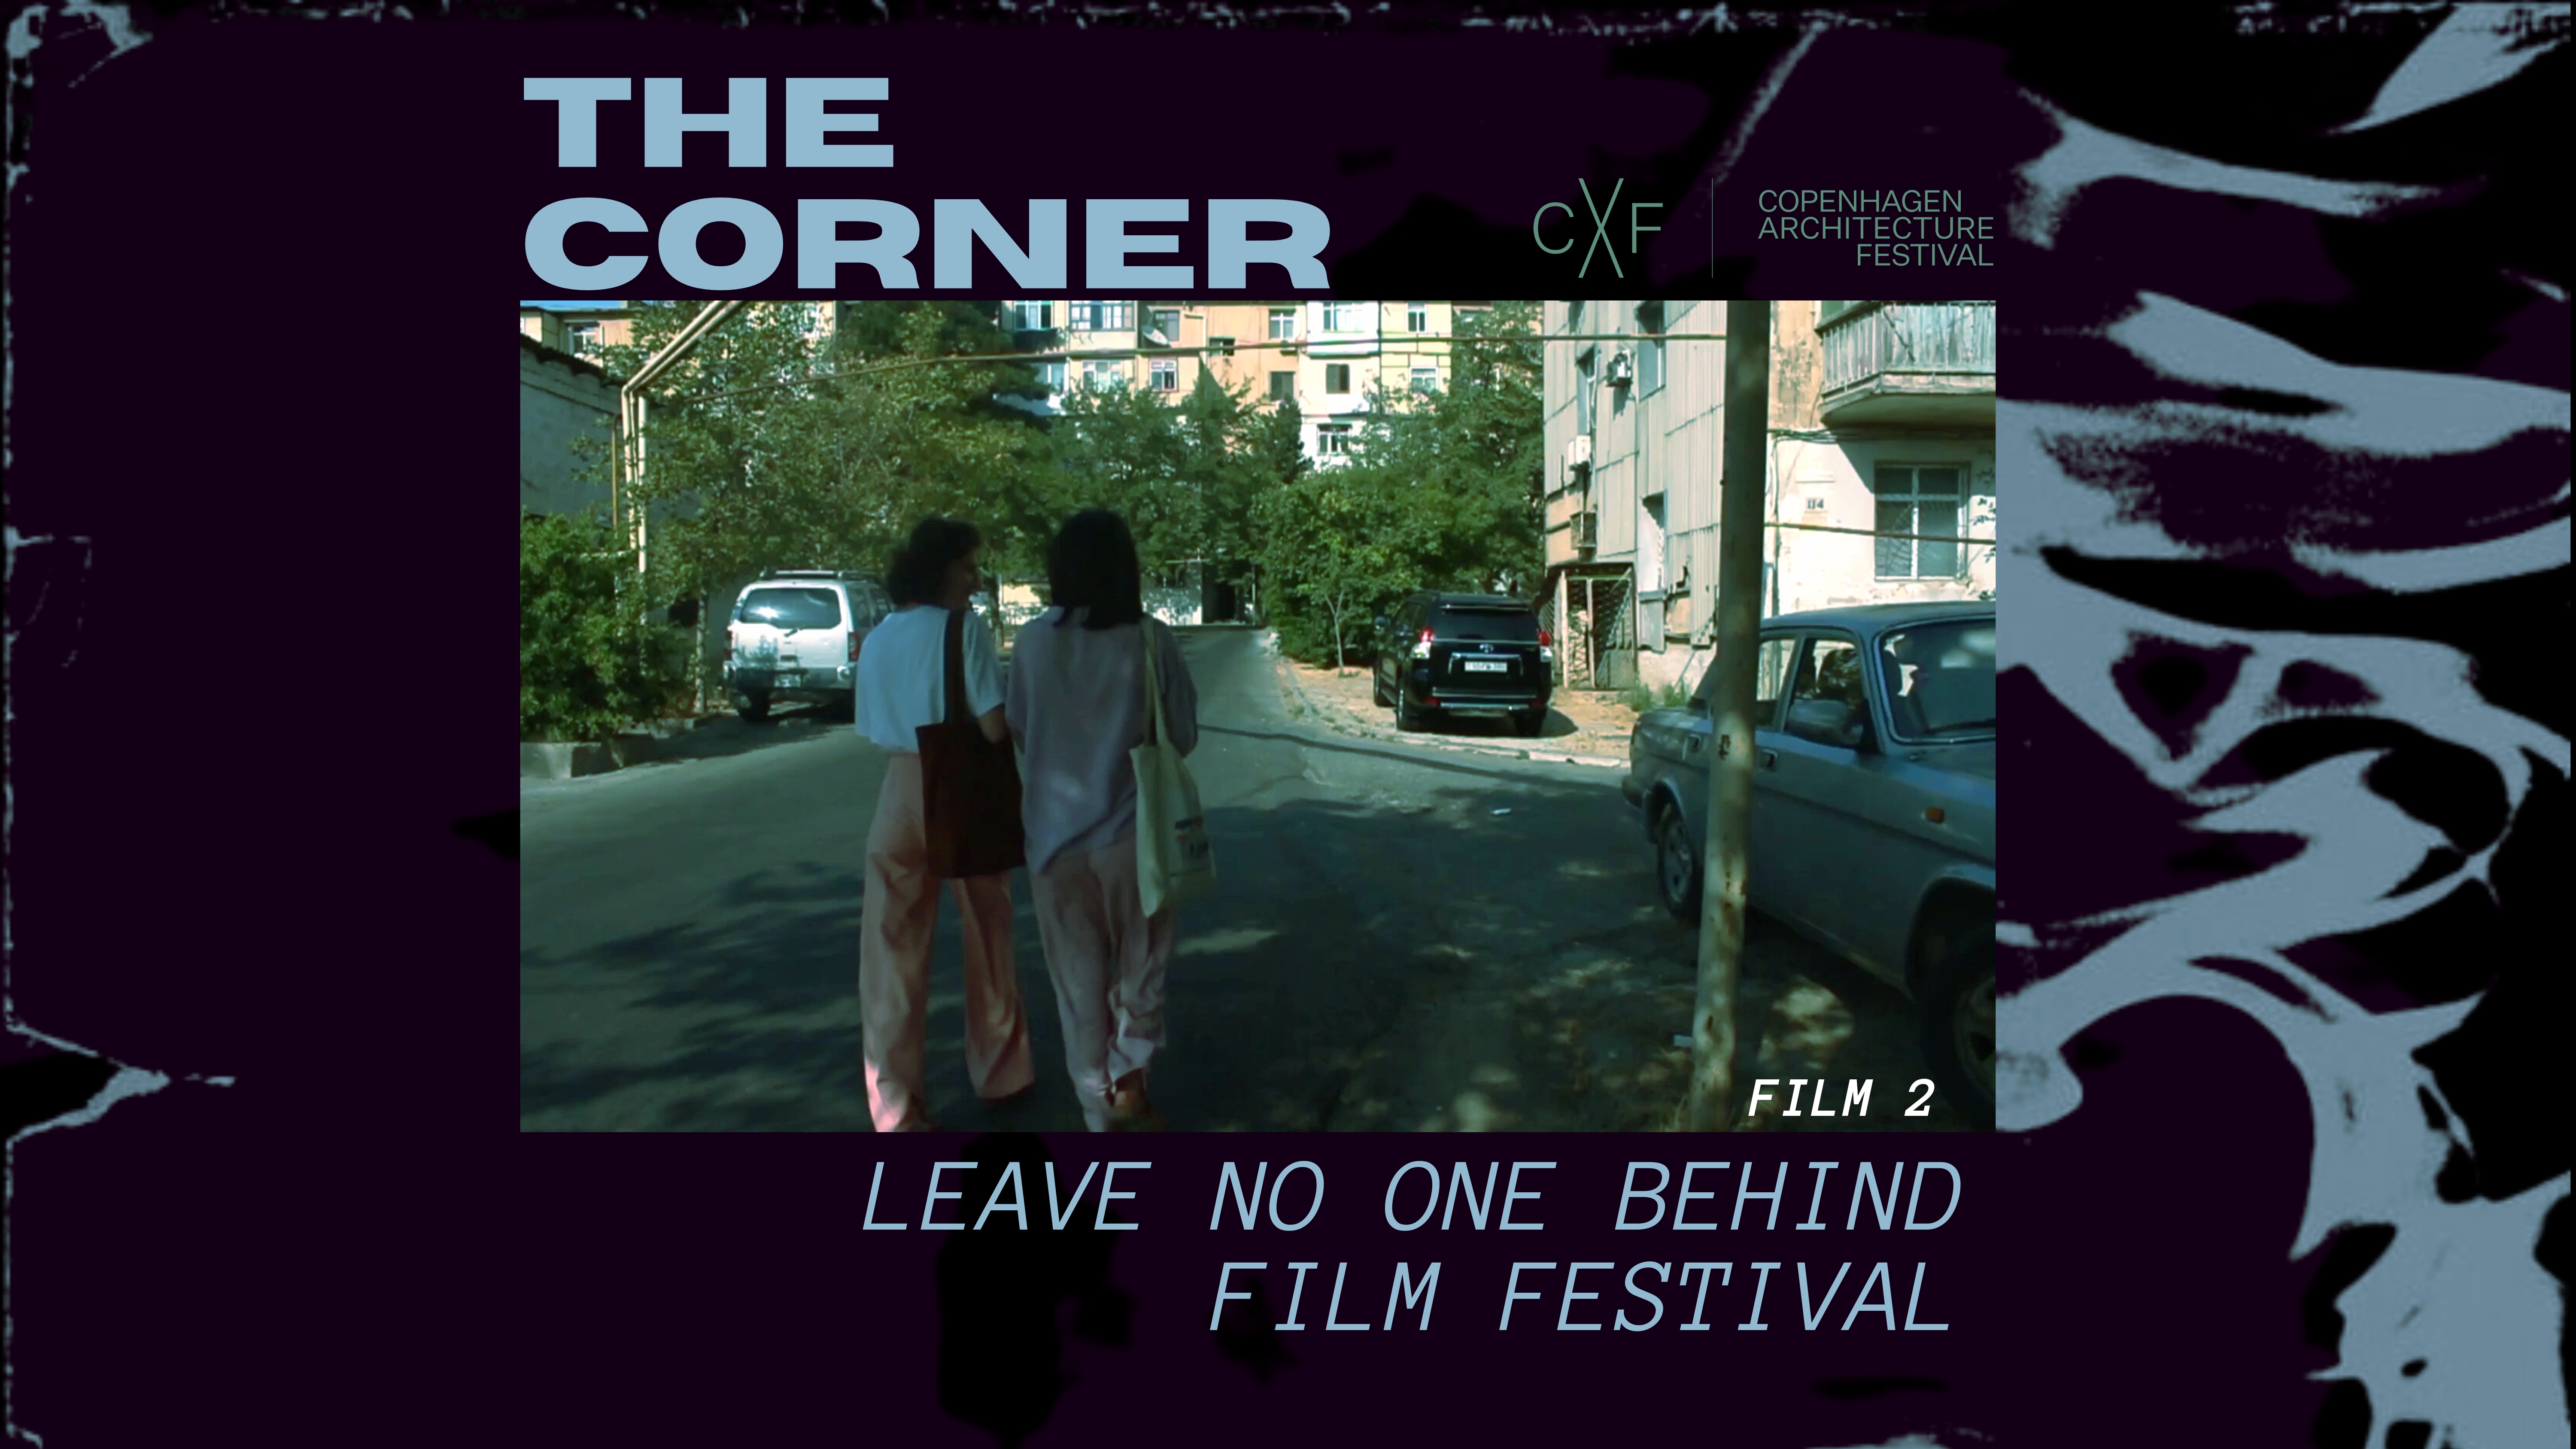 LNOB Film 2: The Corner